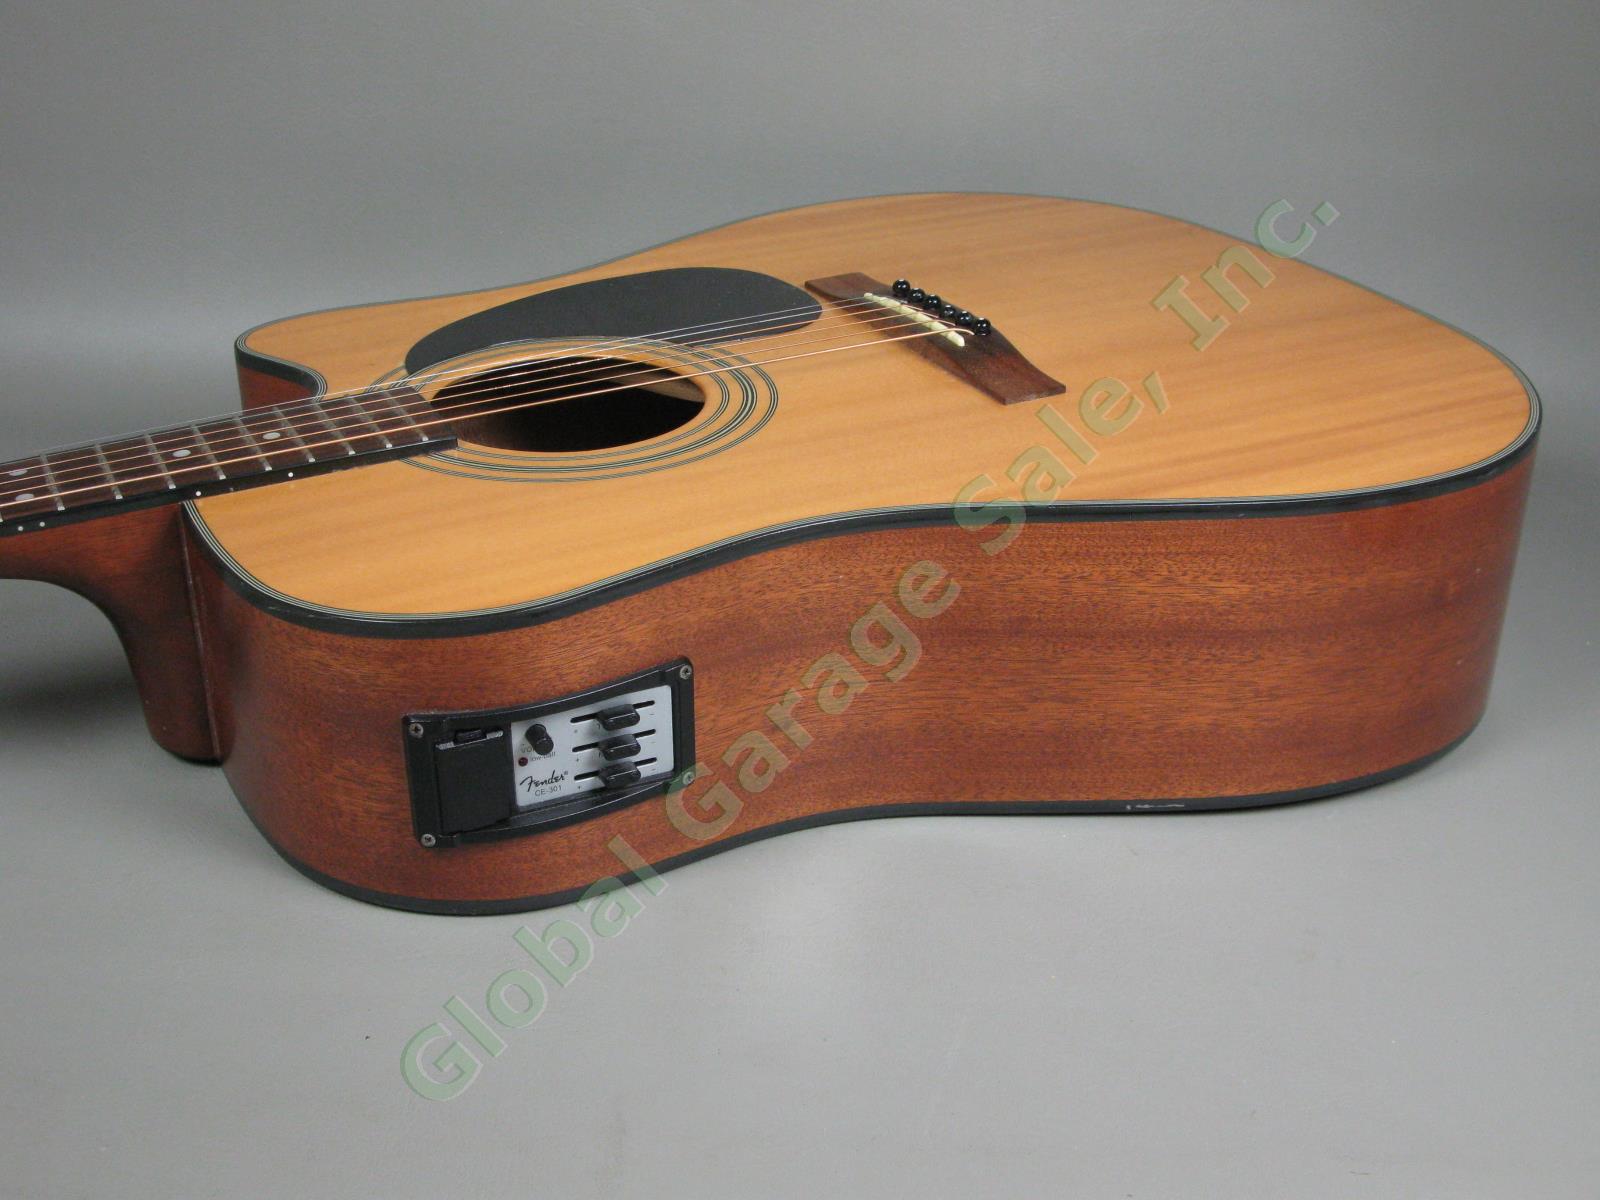 Fender Starcaster Acoustic Electric Cutaway Guitar 8